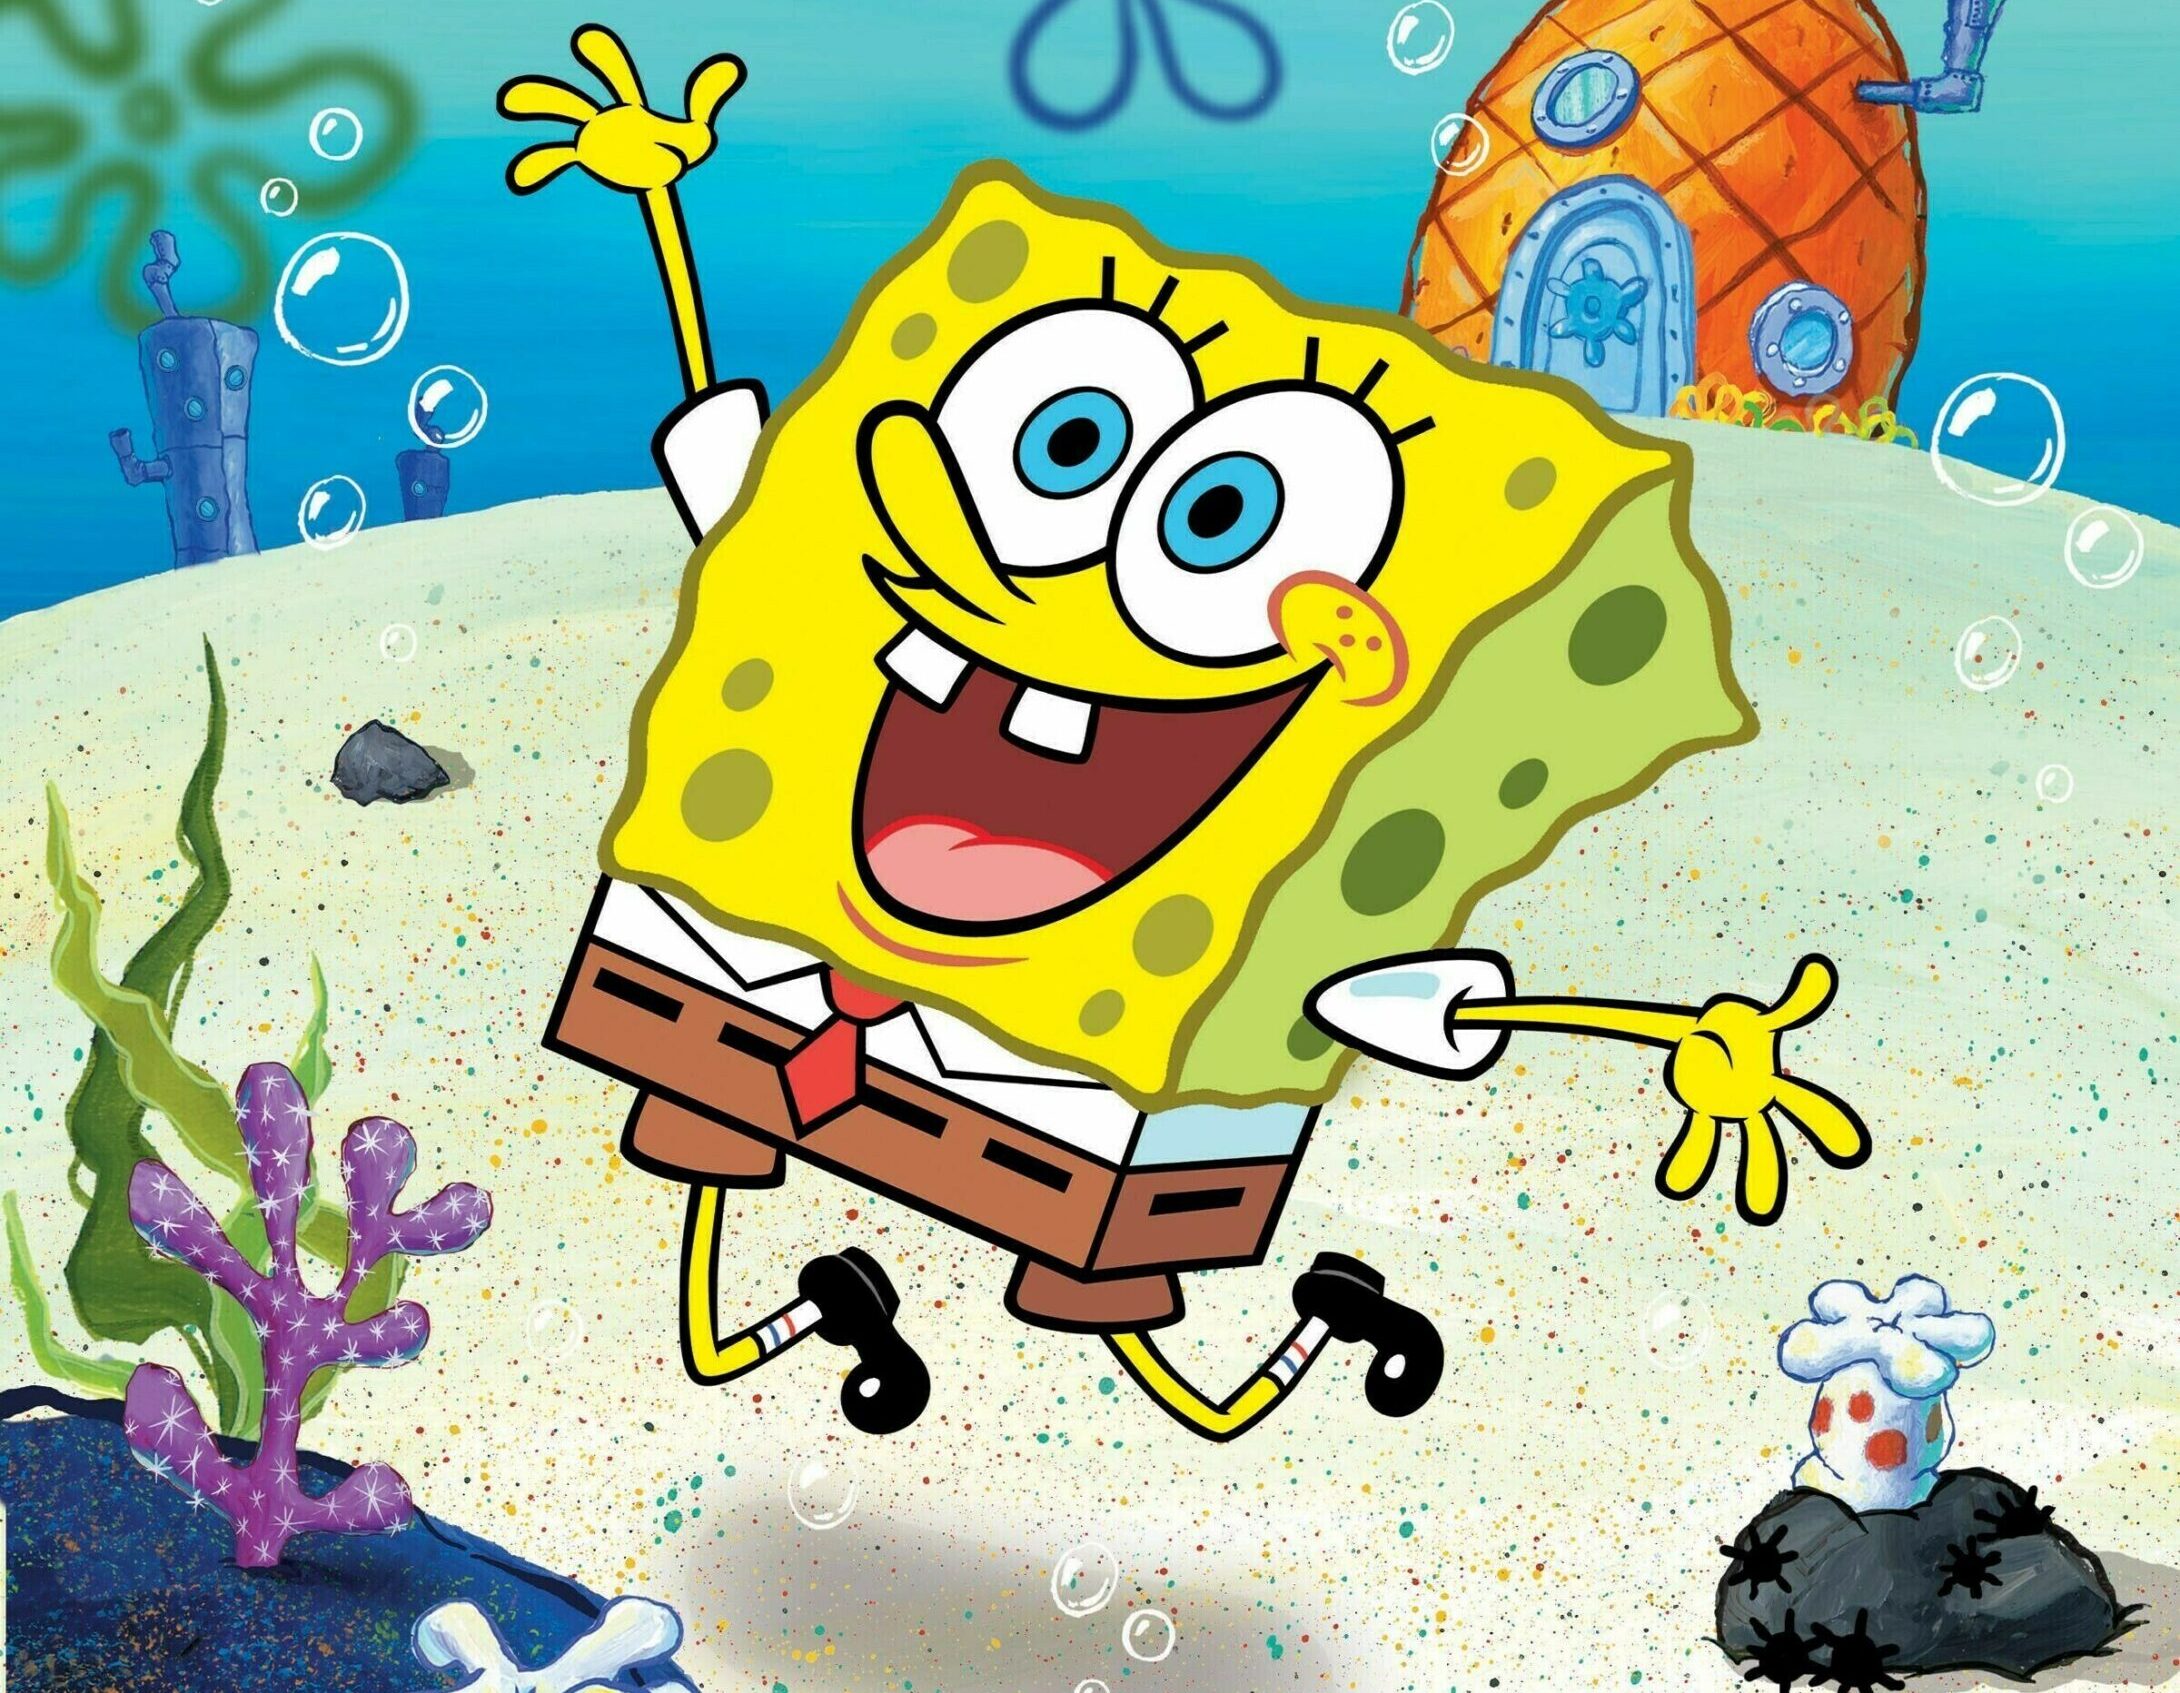 New Solana Memecoin Spongebob Crypto to Skyrocket 12,000%, While Shiba Inu and Dogecoin Struggle